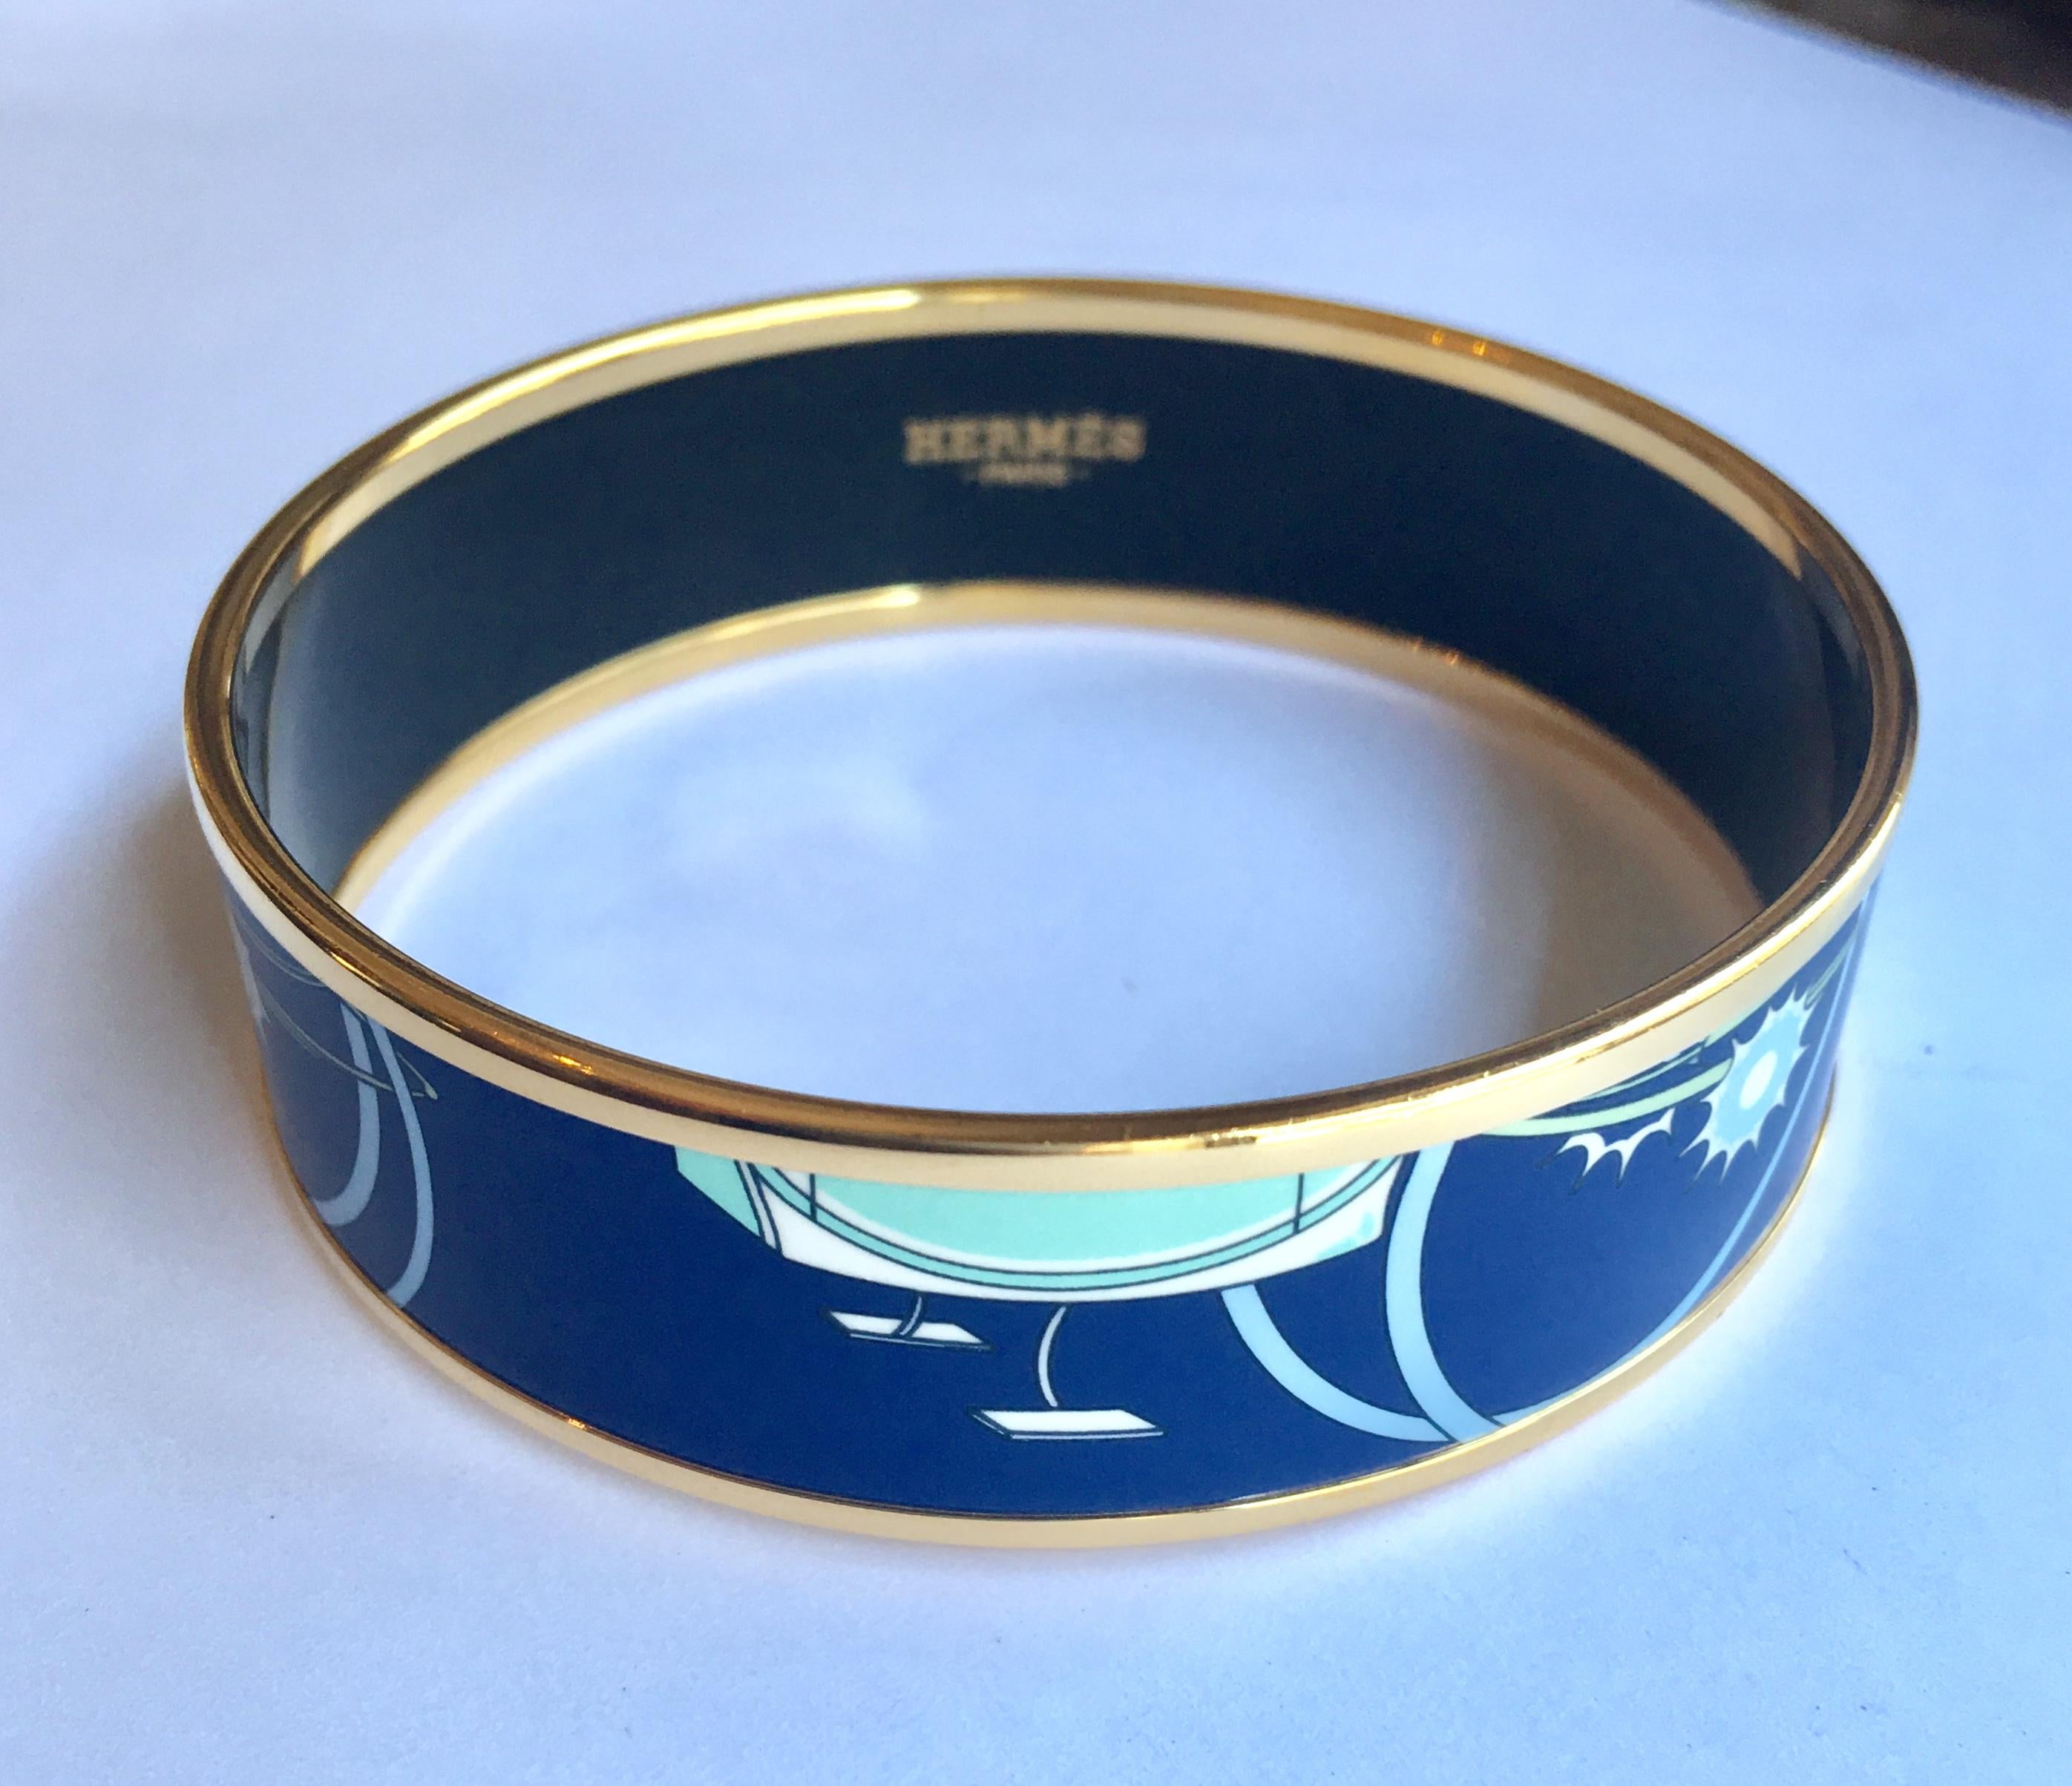 New, never worn, Les Voitures a Transformation bangle

Hermes bracelet in printed enamel.

Gold plated

2.75